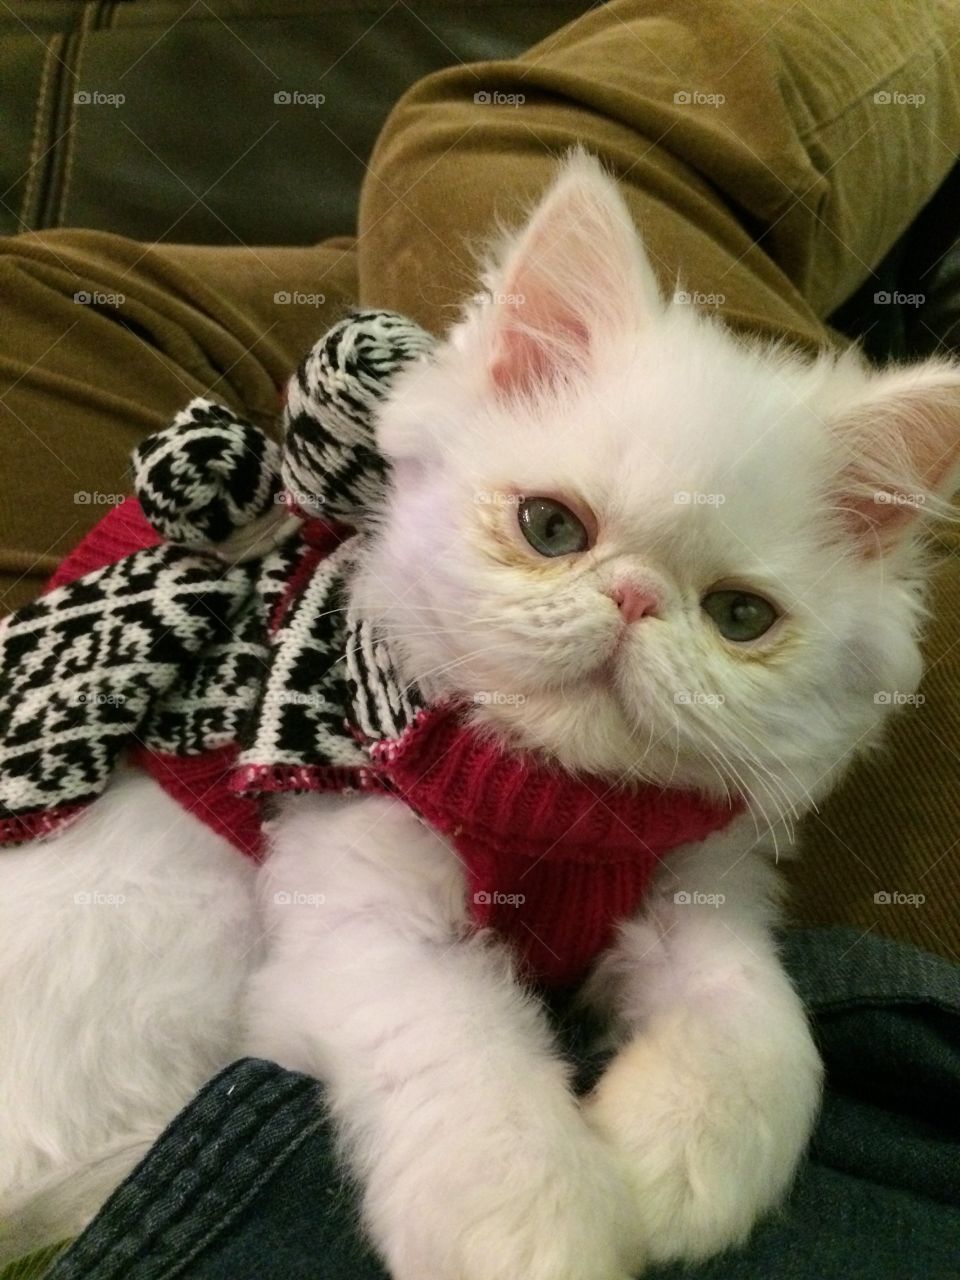 Gizmo the Persian kitten in his winter coat